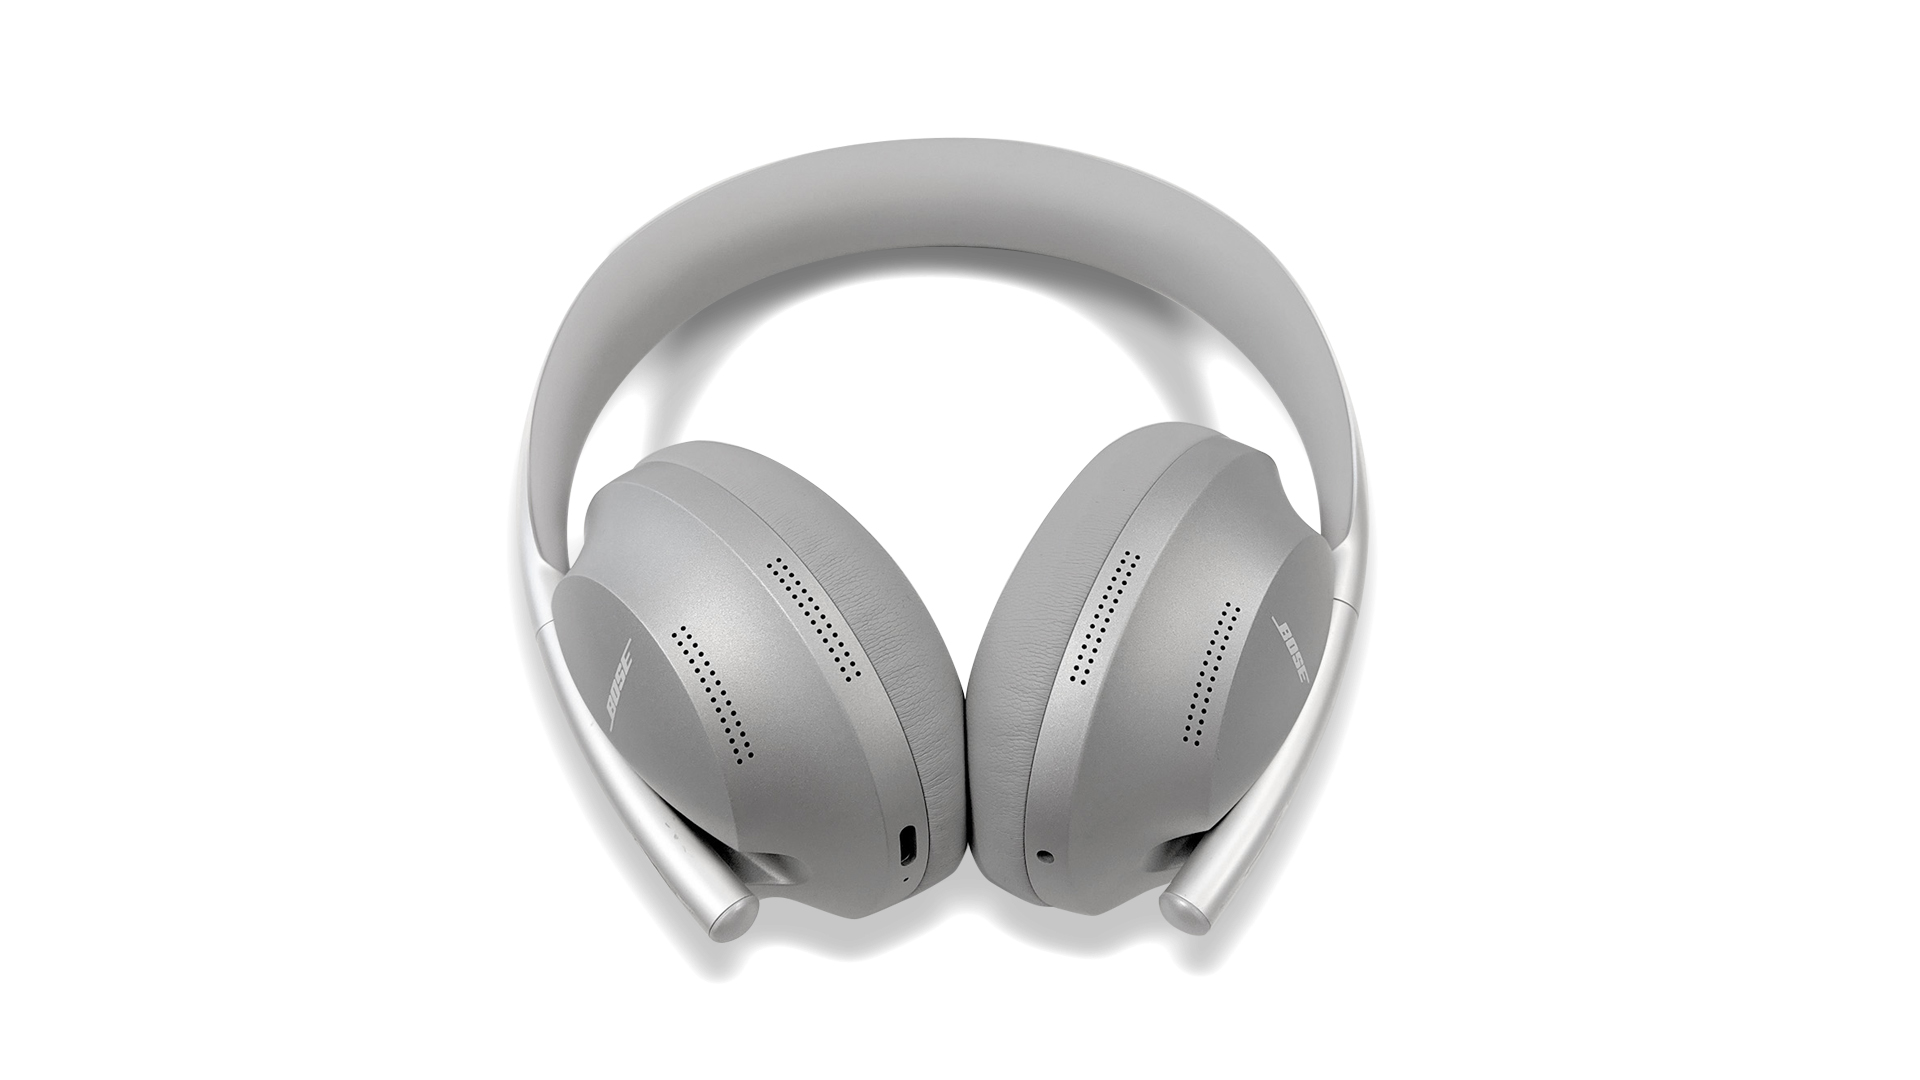 Bose 700 silver noise canceling headphones on white background.